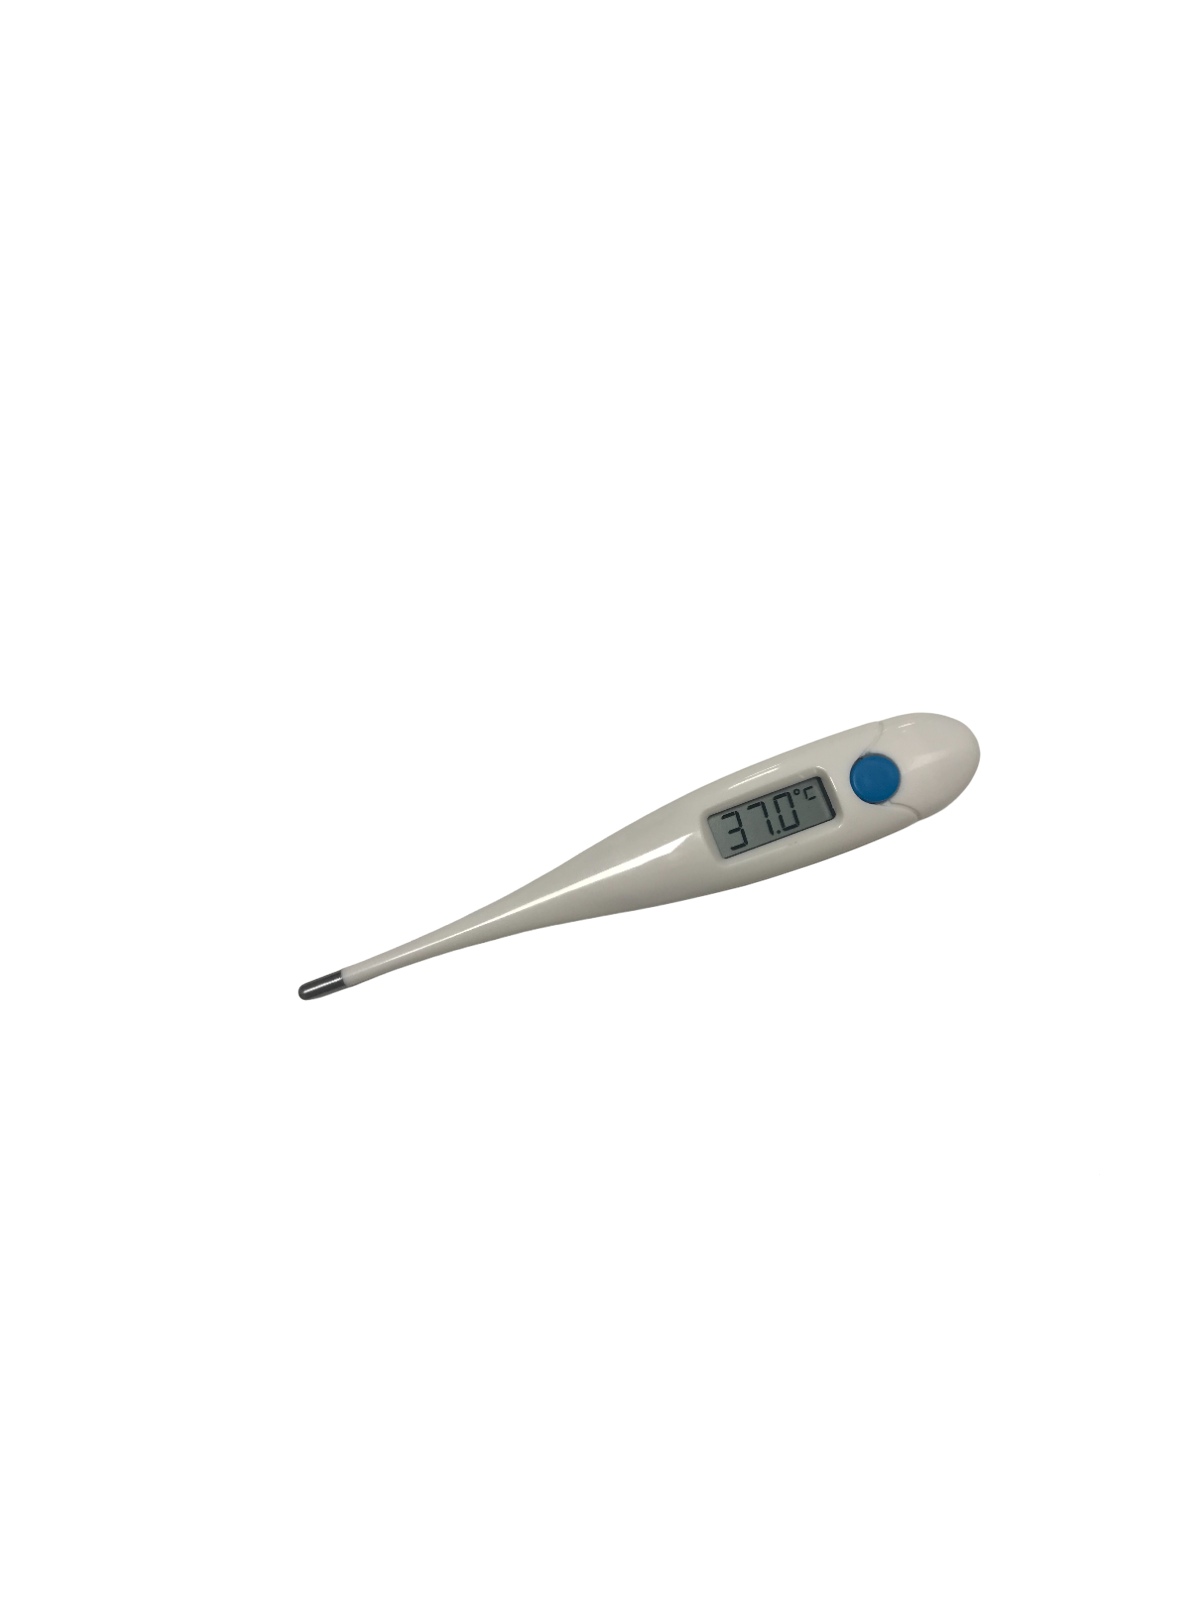 https://enviomedical.com/14726-product_zoom/termometro-digital-de-punta-rigida-termometros.jpg